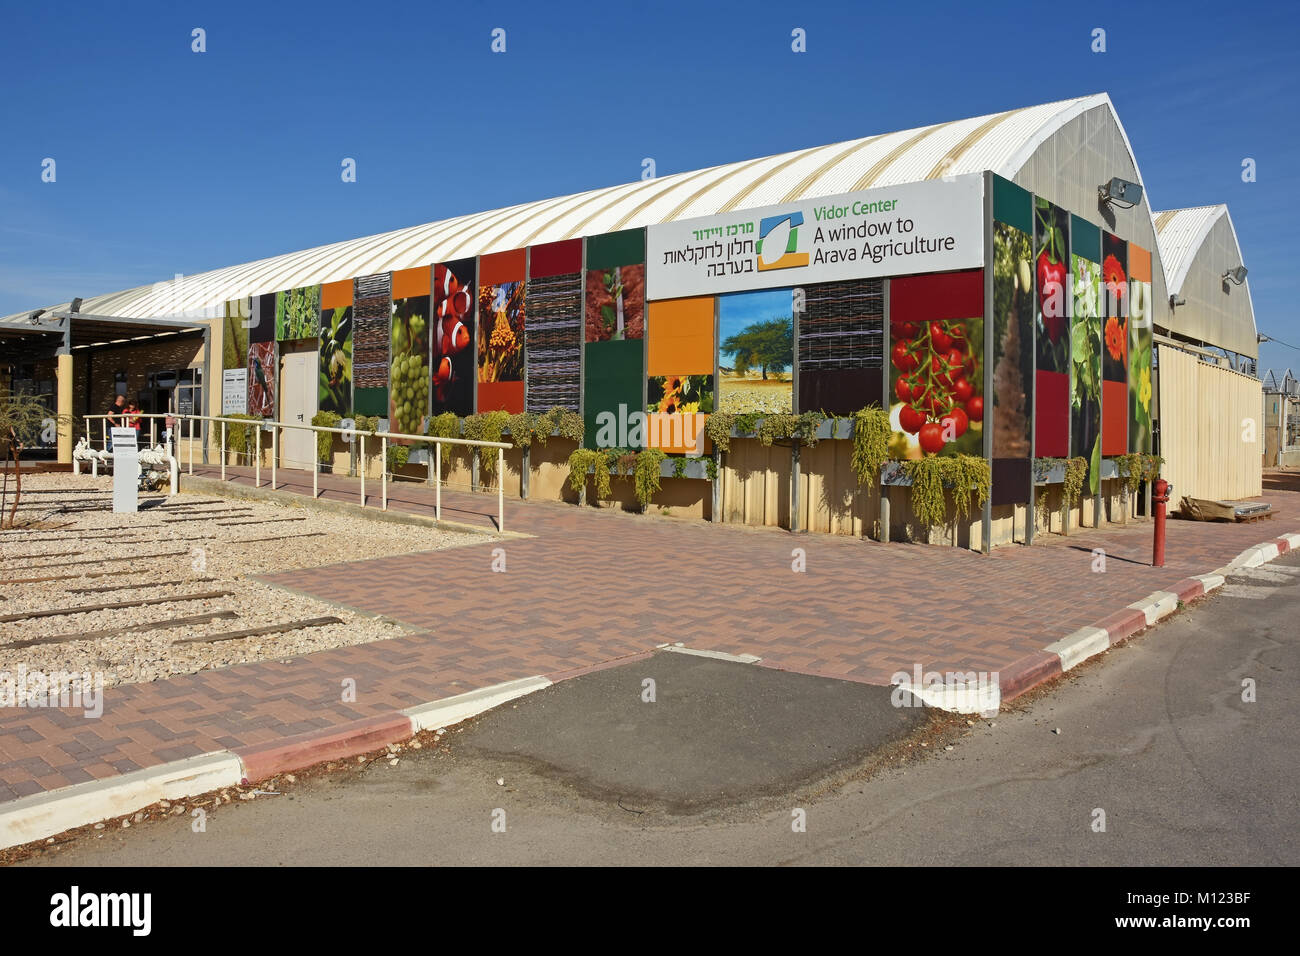 Vidor Zentrum, Arava, Israel Stockfoto